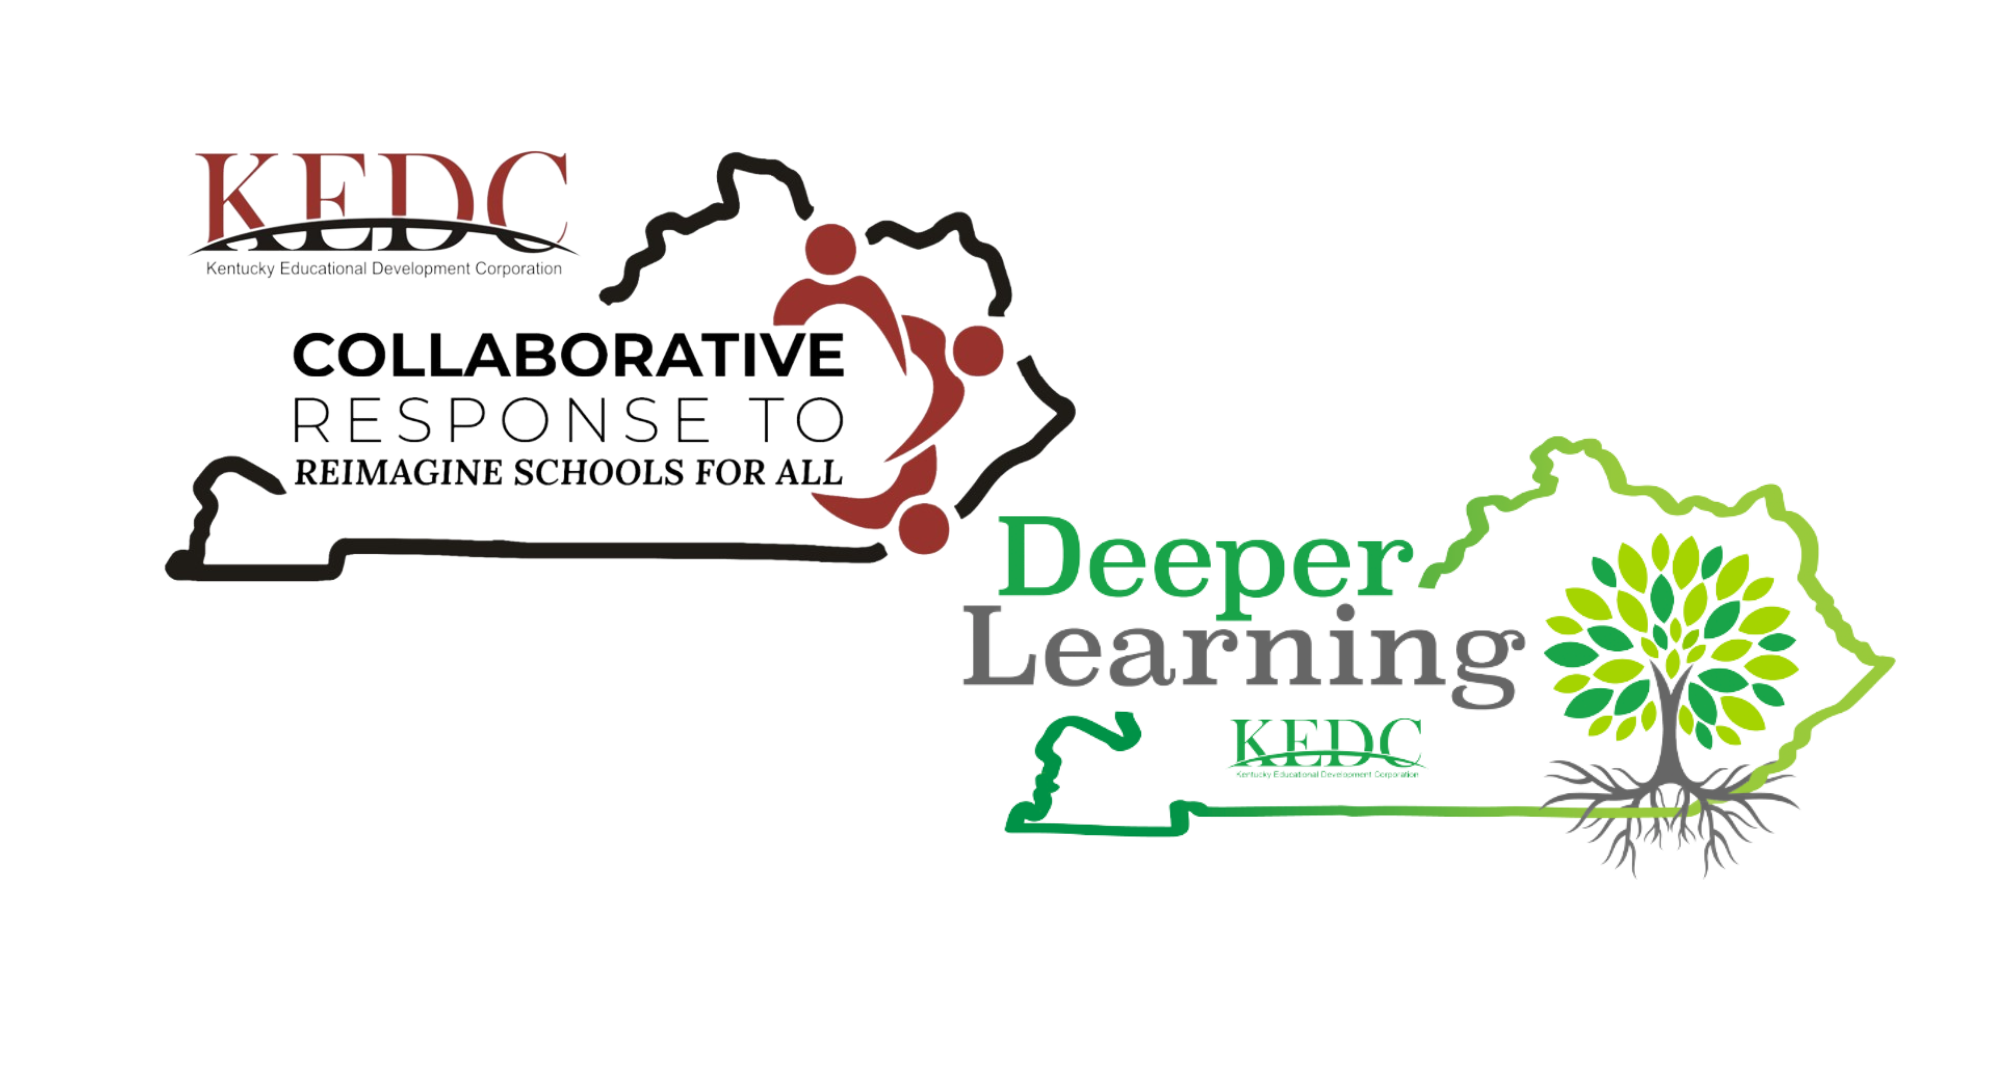 CRRSA & Deeper Learning